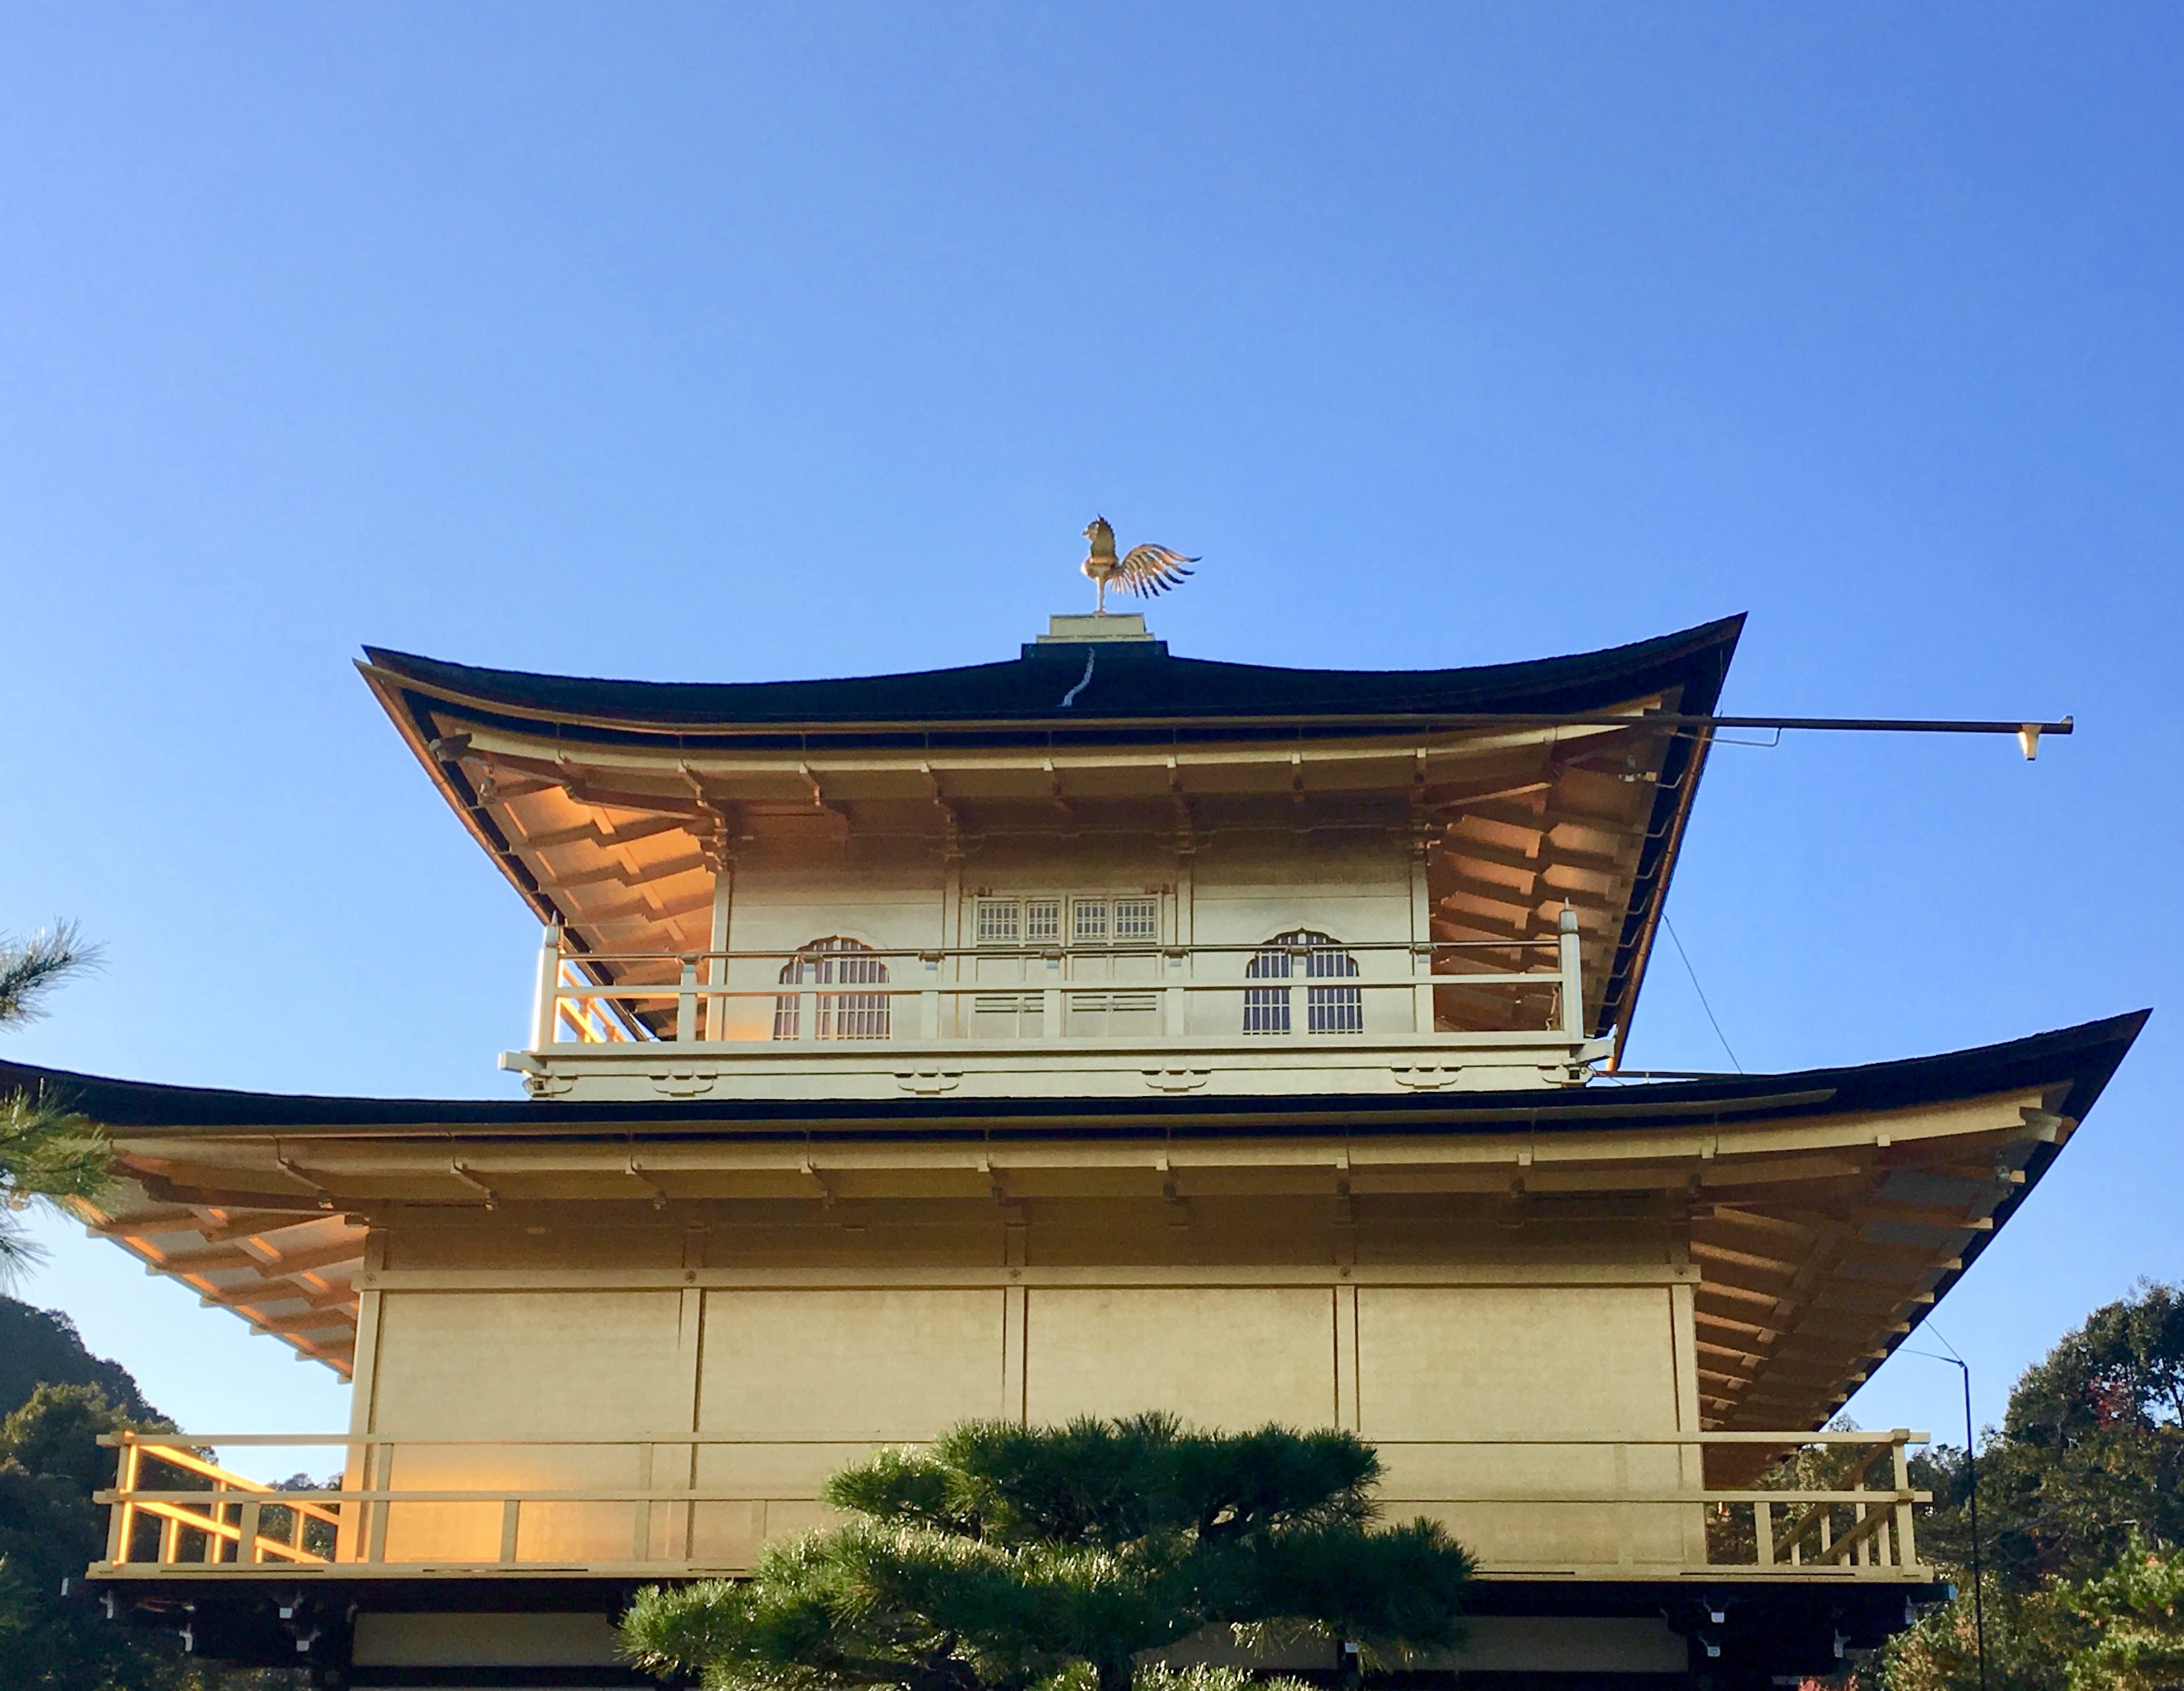 up close view of the top two levels of the kinkaku-ji